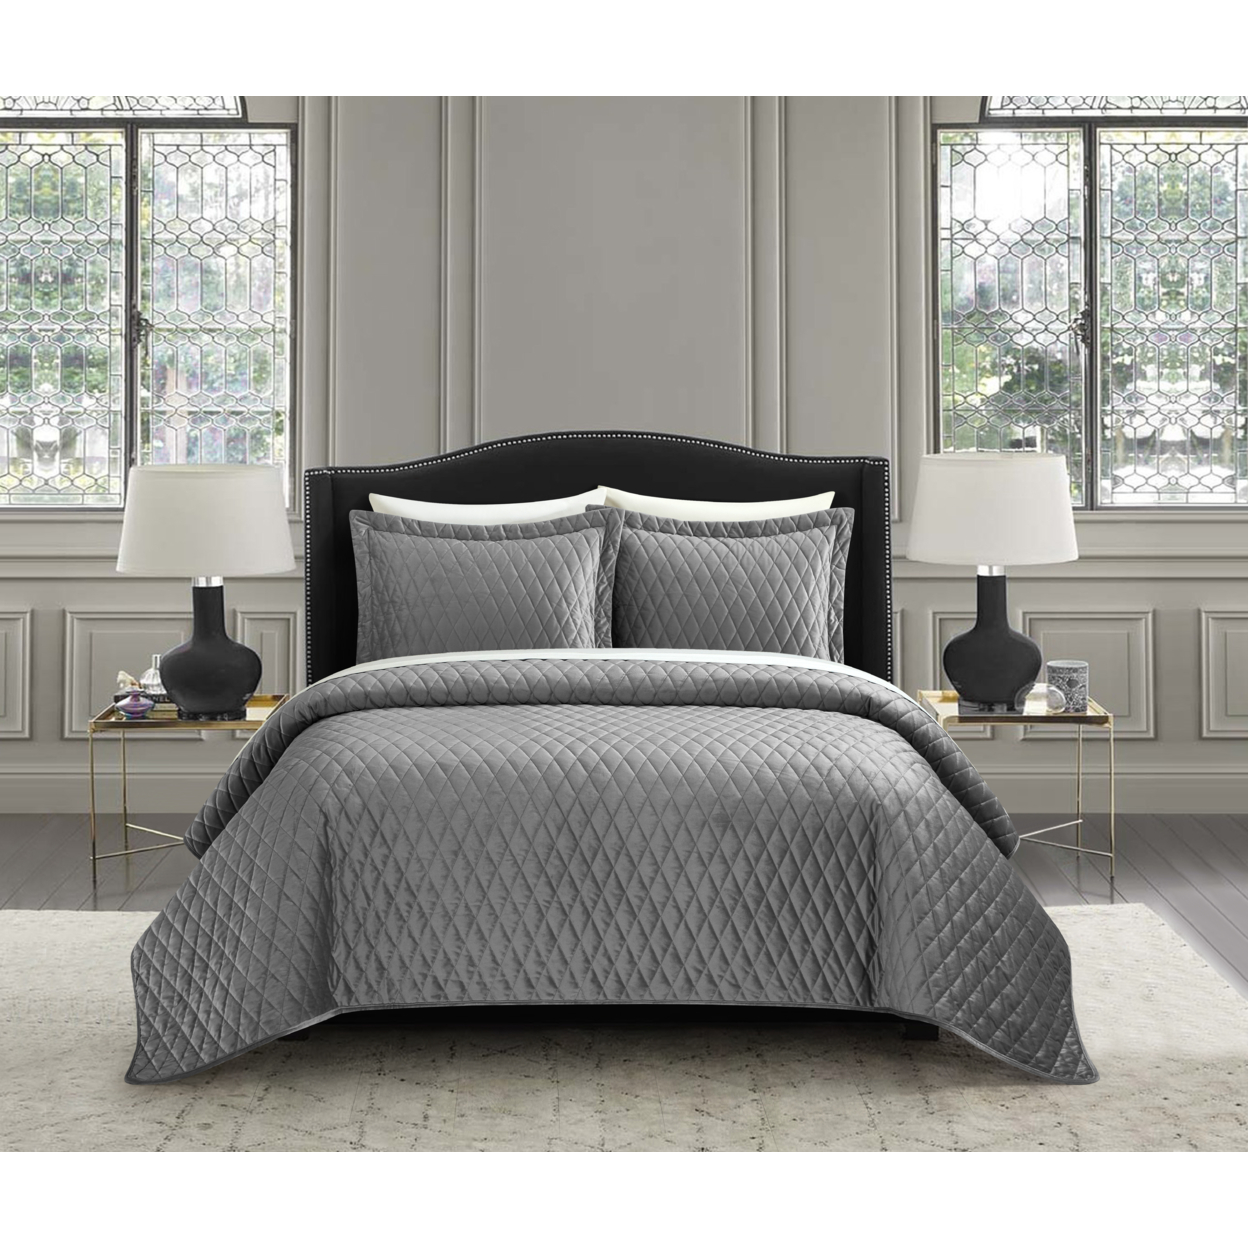 NY&C Home Dafa 3 Piece Velvet Quilt Set Diamond Stitched Pattern Bedding - Grey, Queen